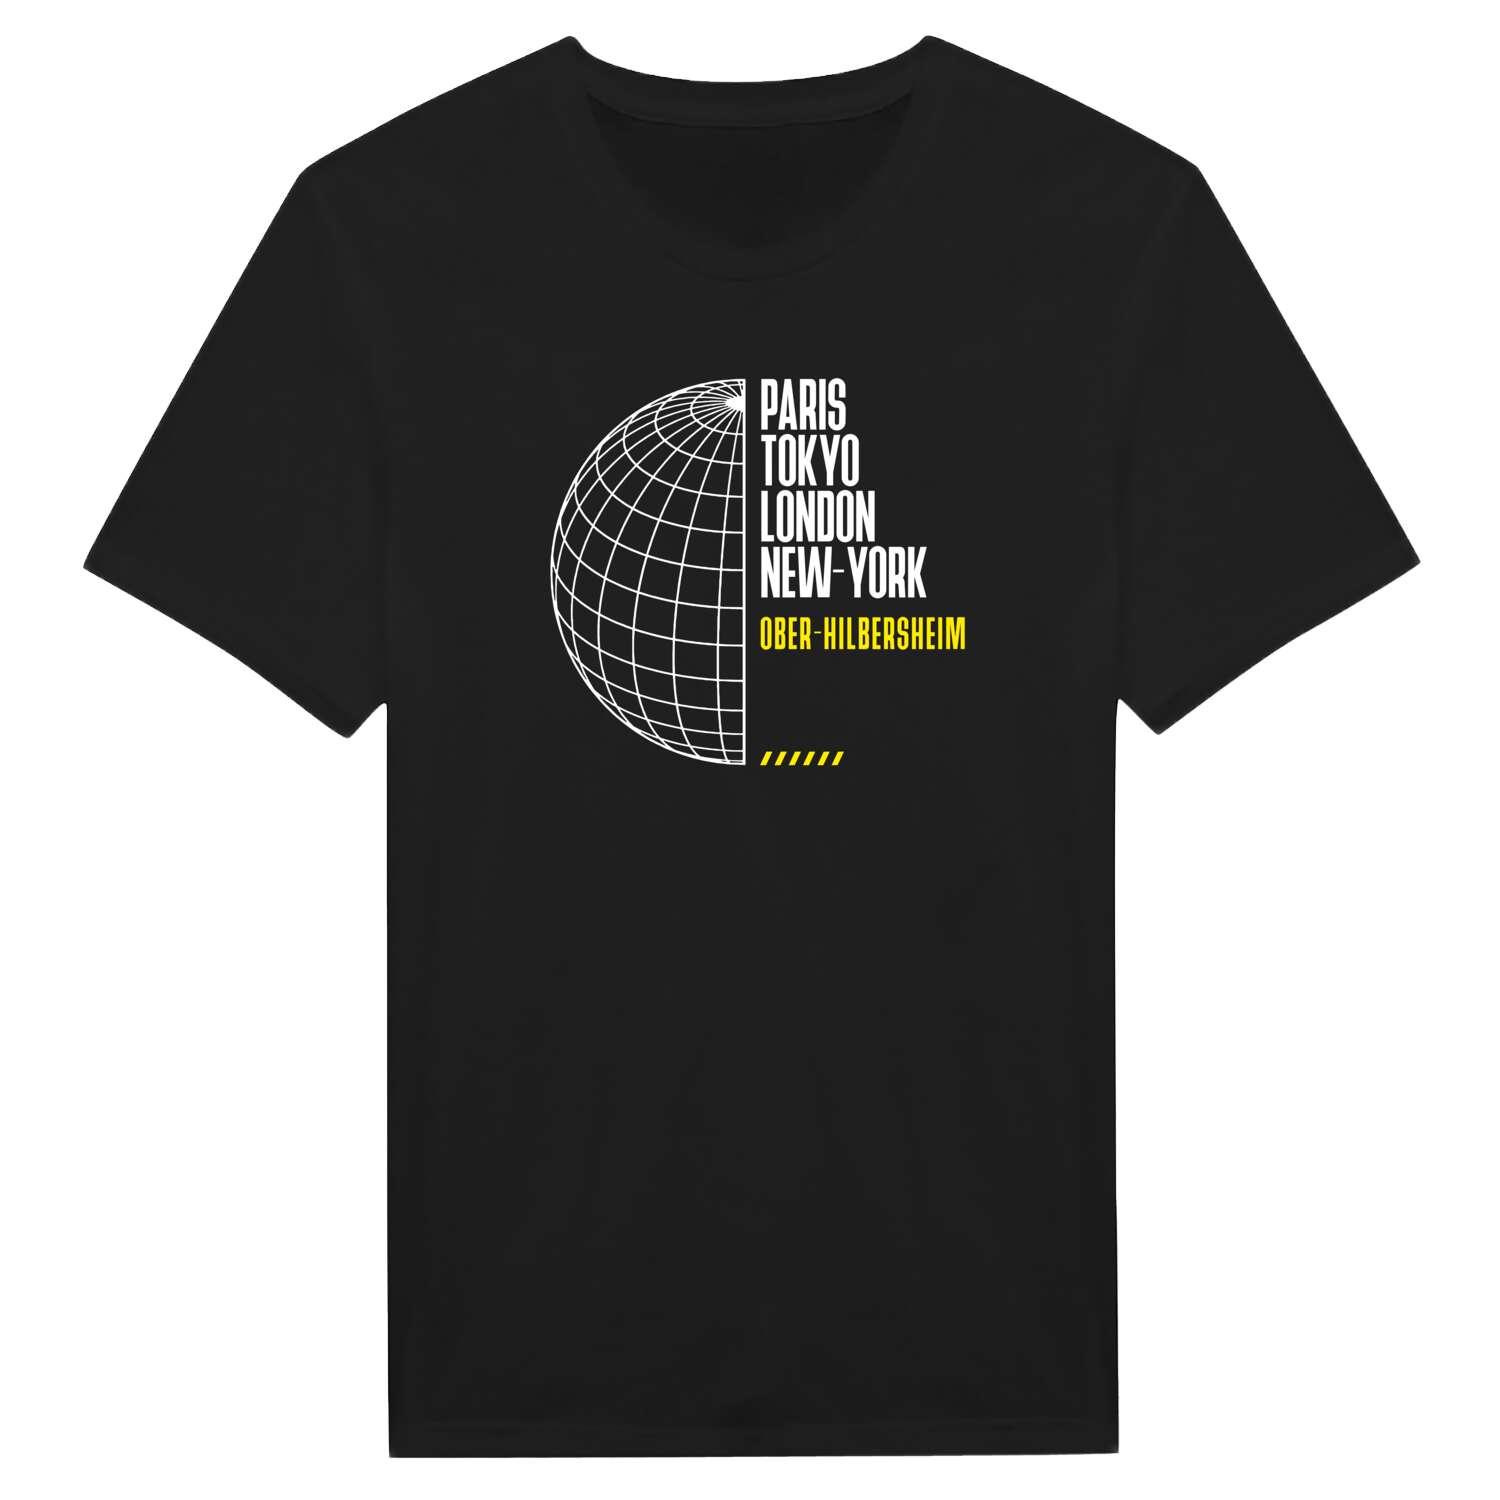 Ober-Hilbersheim T-Shirt »Paris Tokyo London«